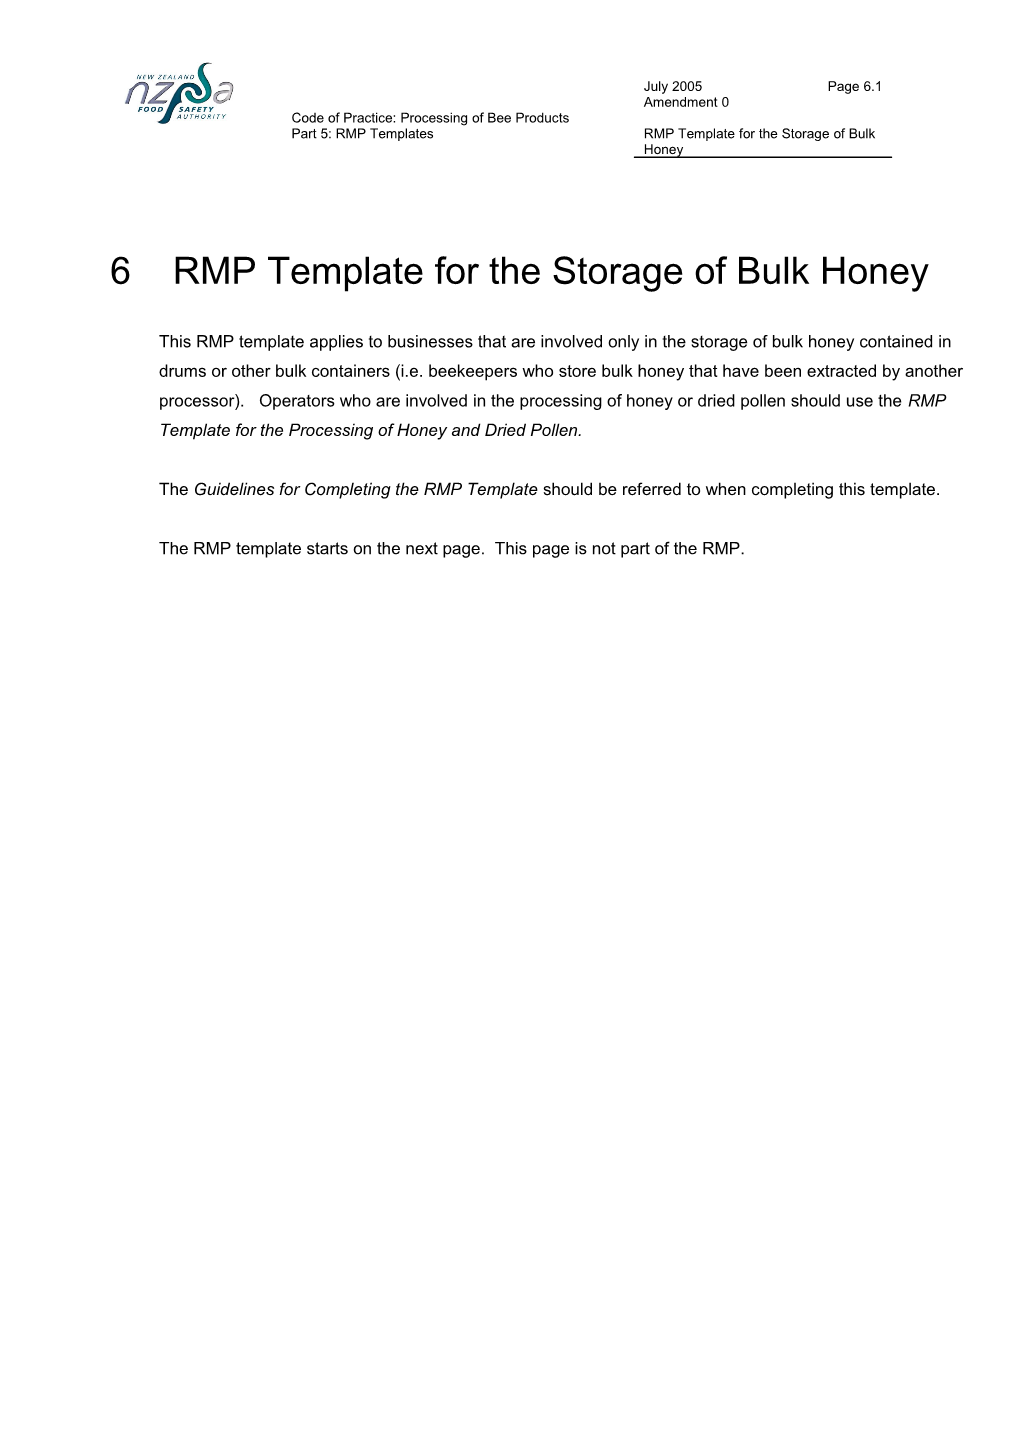 RMP Template for the Storage of Bulk Honey